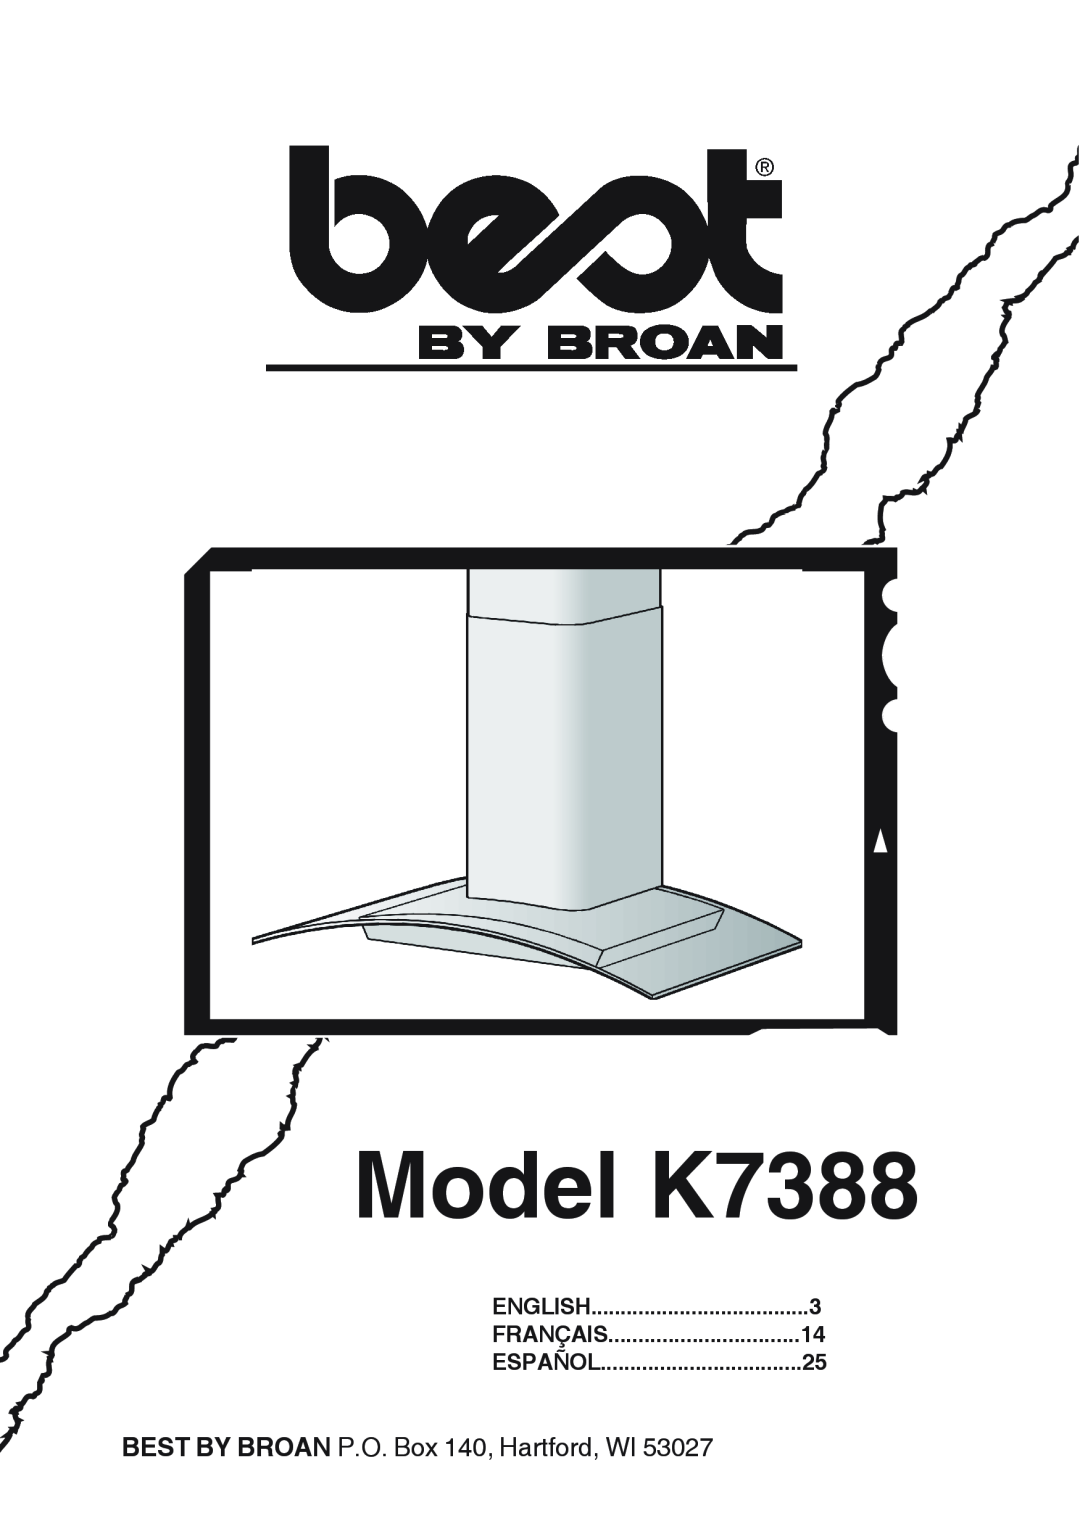 Broan manual English, Français, Español, Model K7388, BEST BY BROAN P.O. Box 140, Hartford, WI 